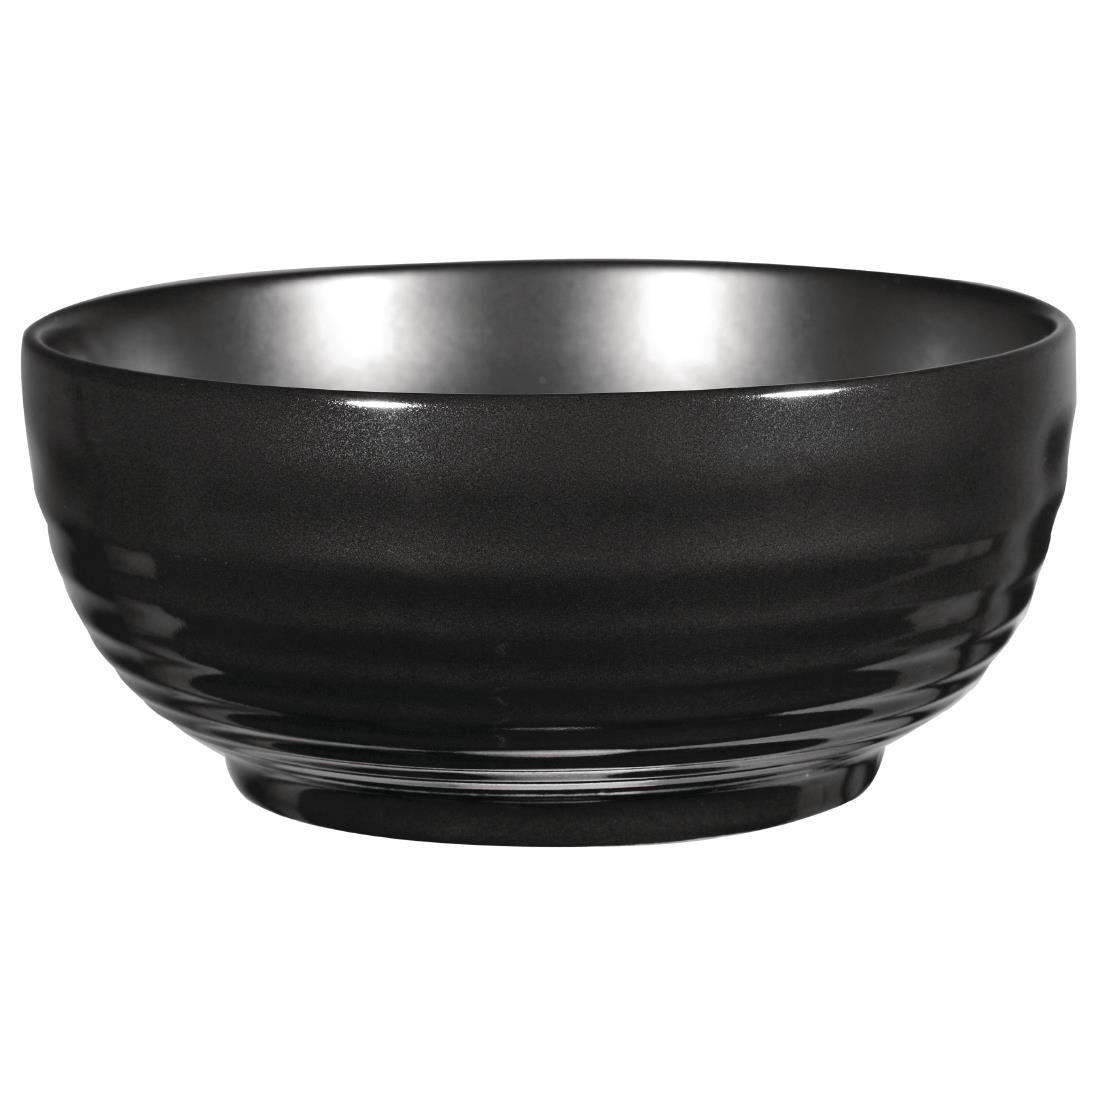 Art de Cuisine Black Glaze Ripple Bowls Large (Pack of 4) - GF708  - 1